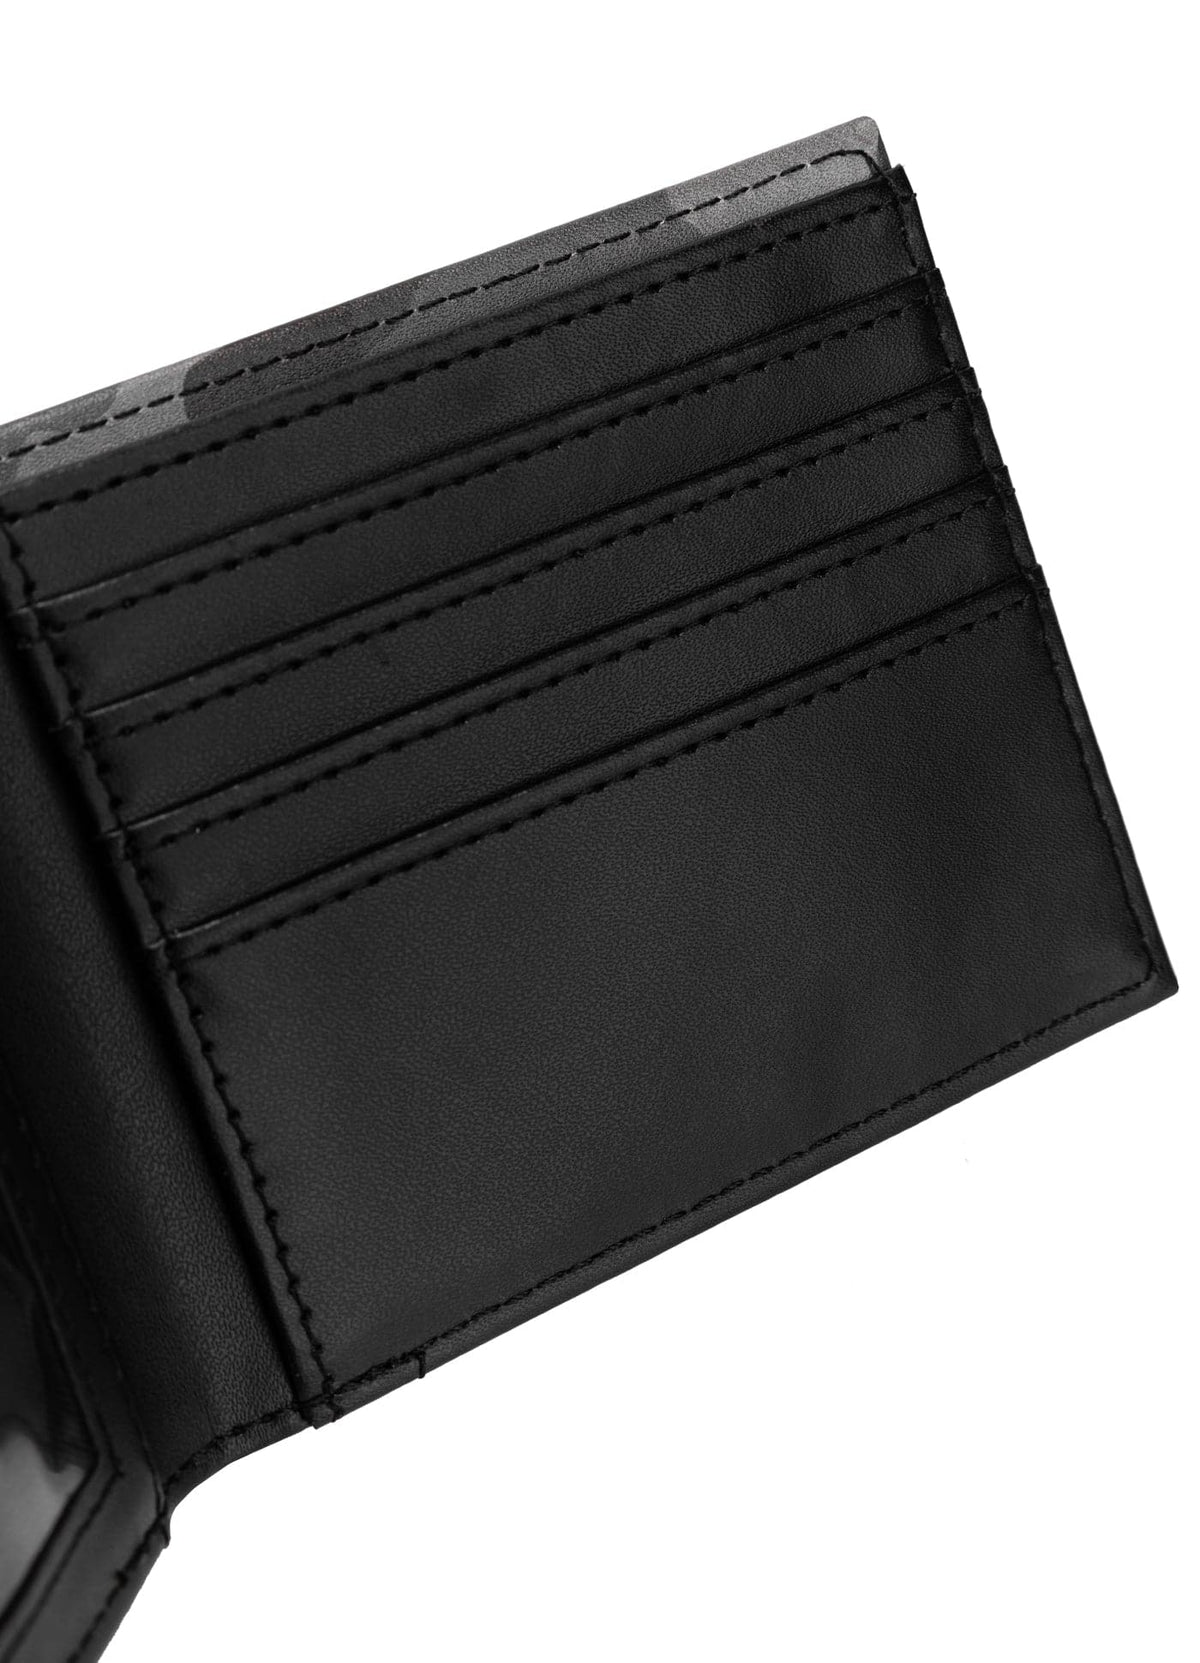 CROSS CAMO Grey Leather Wallet - Pitbullstore.eu